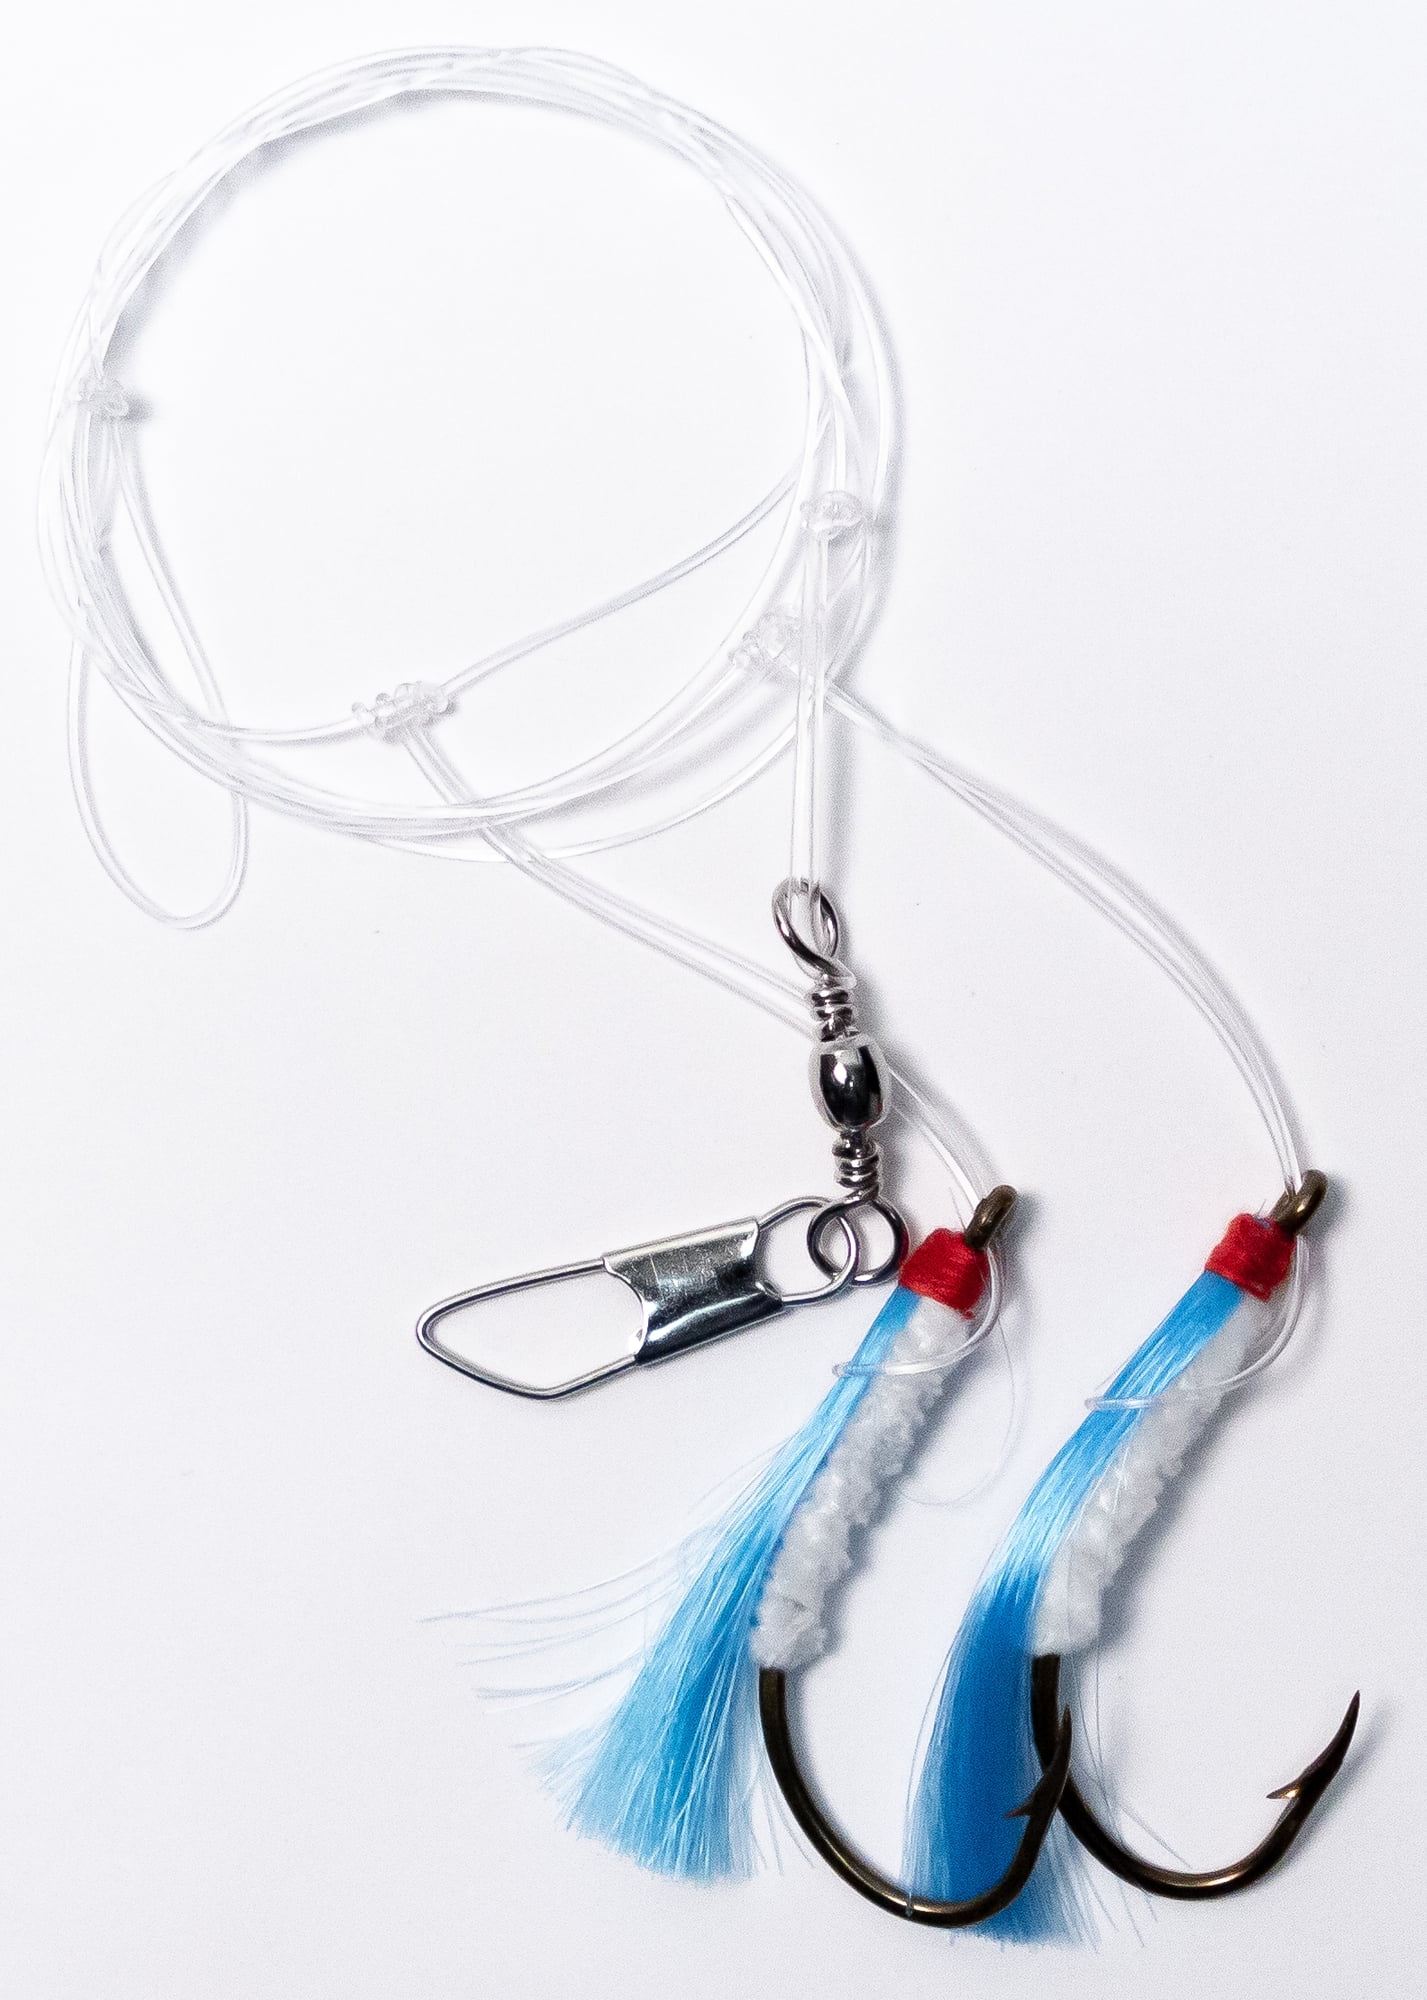 Sea Striker Double-drop Shrimp Fly Fishing Rig, Blue/White Flies, 60# Leader  Line, #7/0 Hooks 